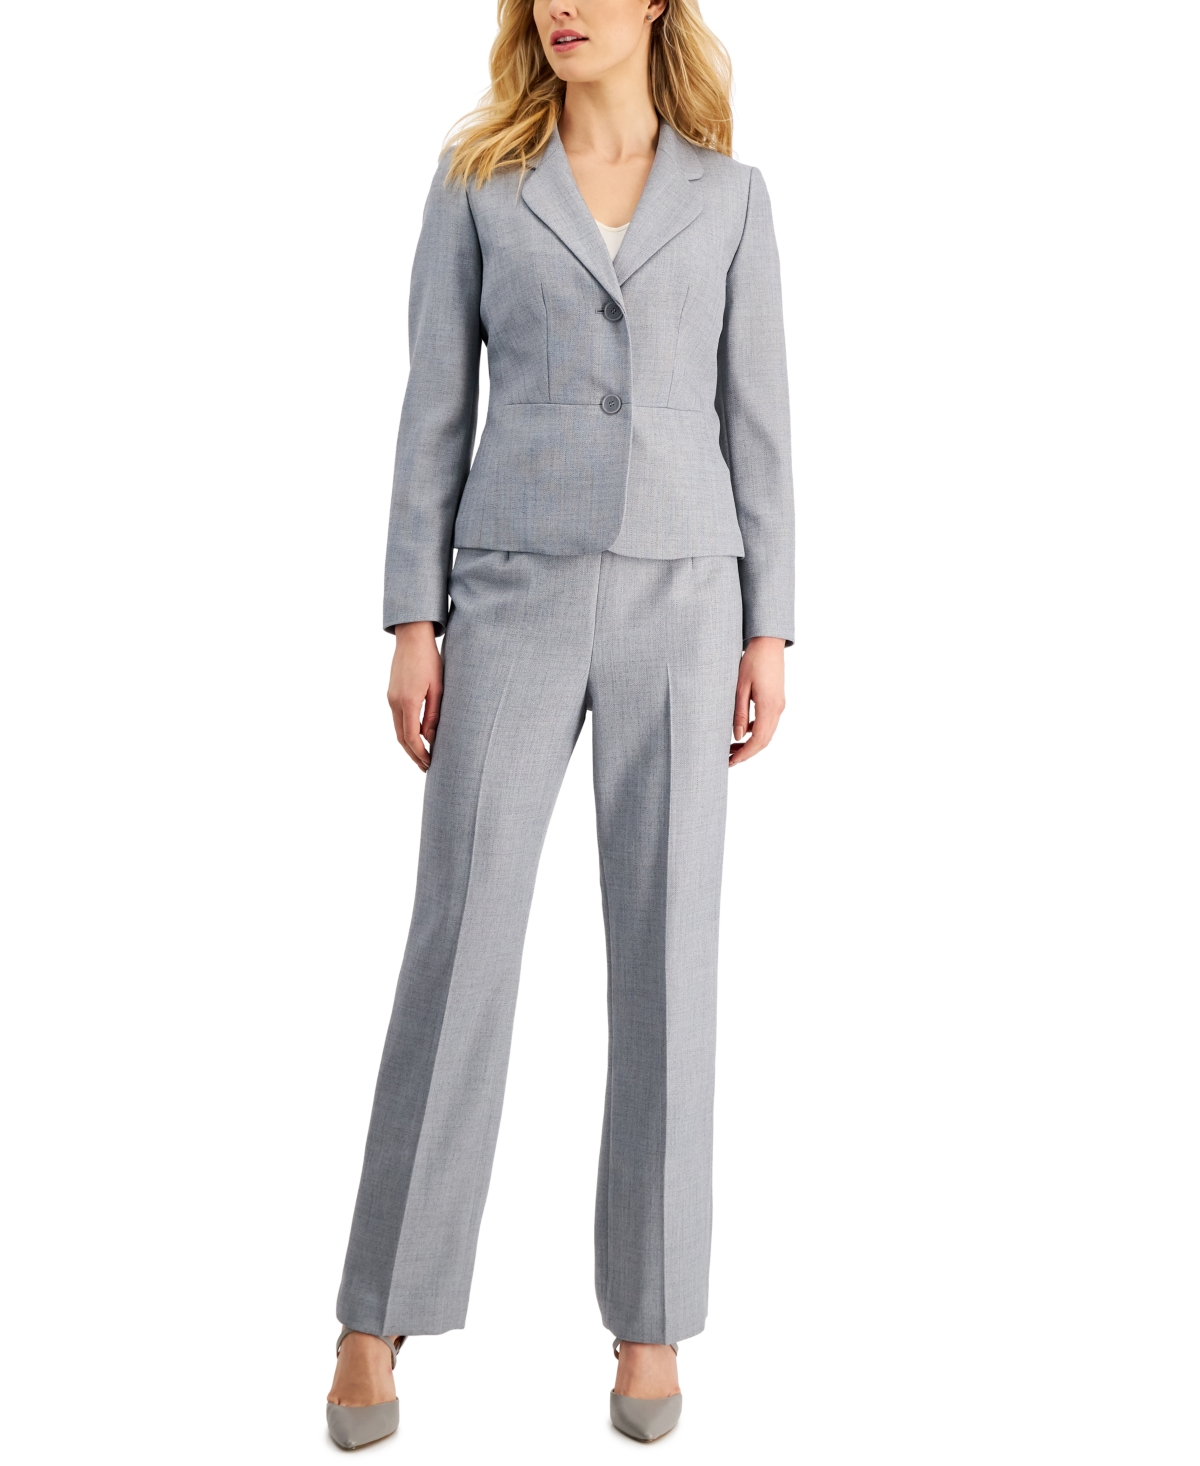 Women's Notch-Collar Pantsuit, Regular and Petite Sizes - White/Khaki